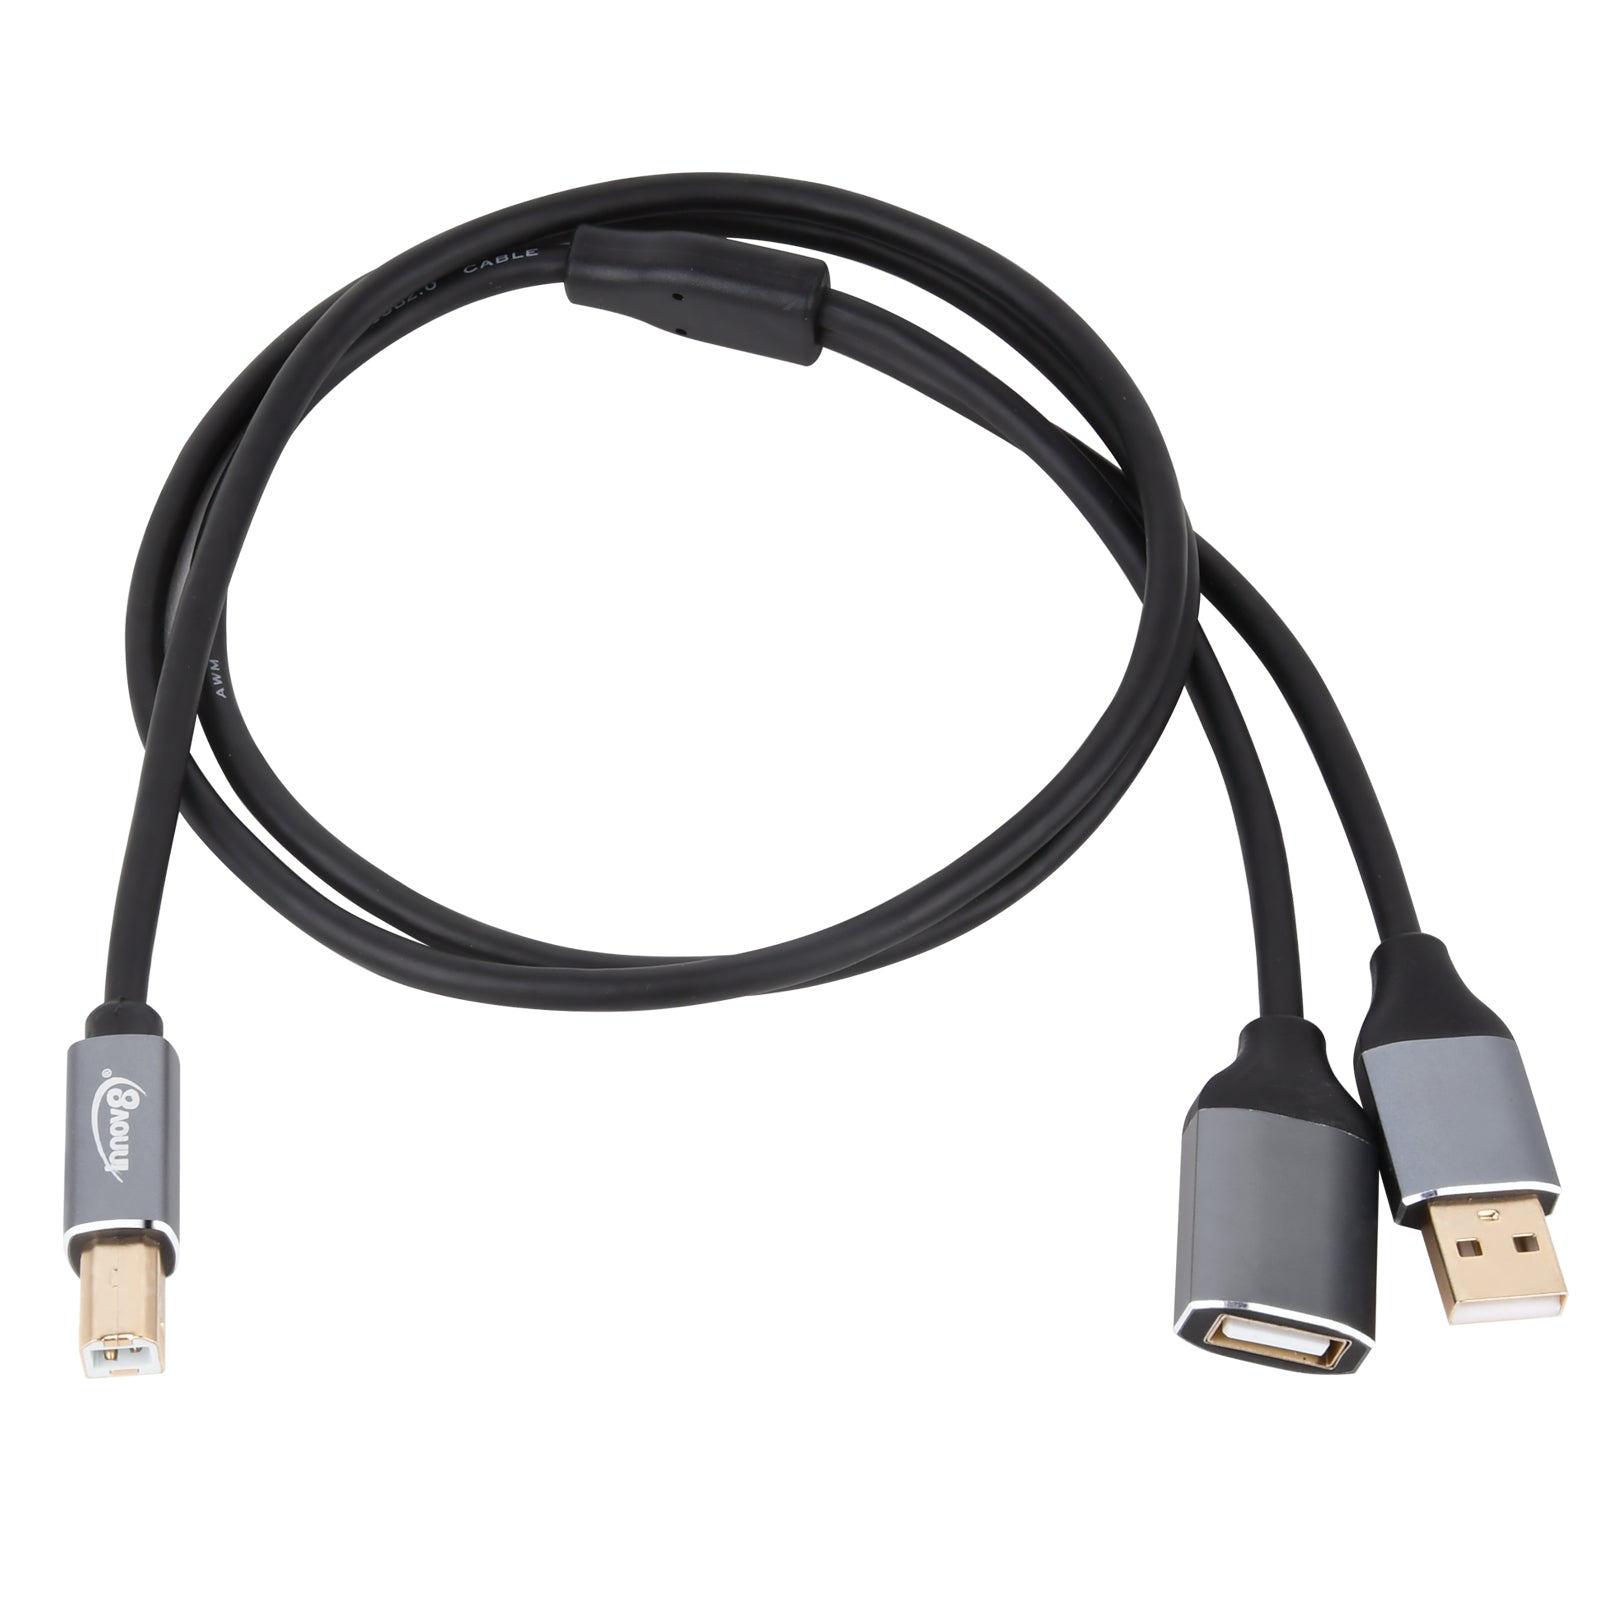 USB-B 2.0 Male to USB-A Male & Female Splitter Printer Cable 1m